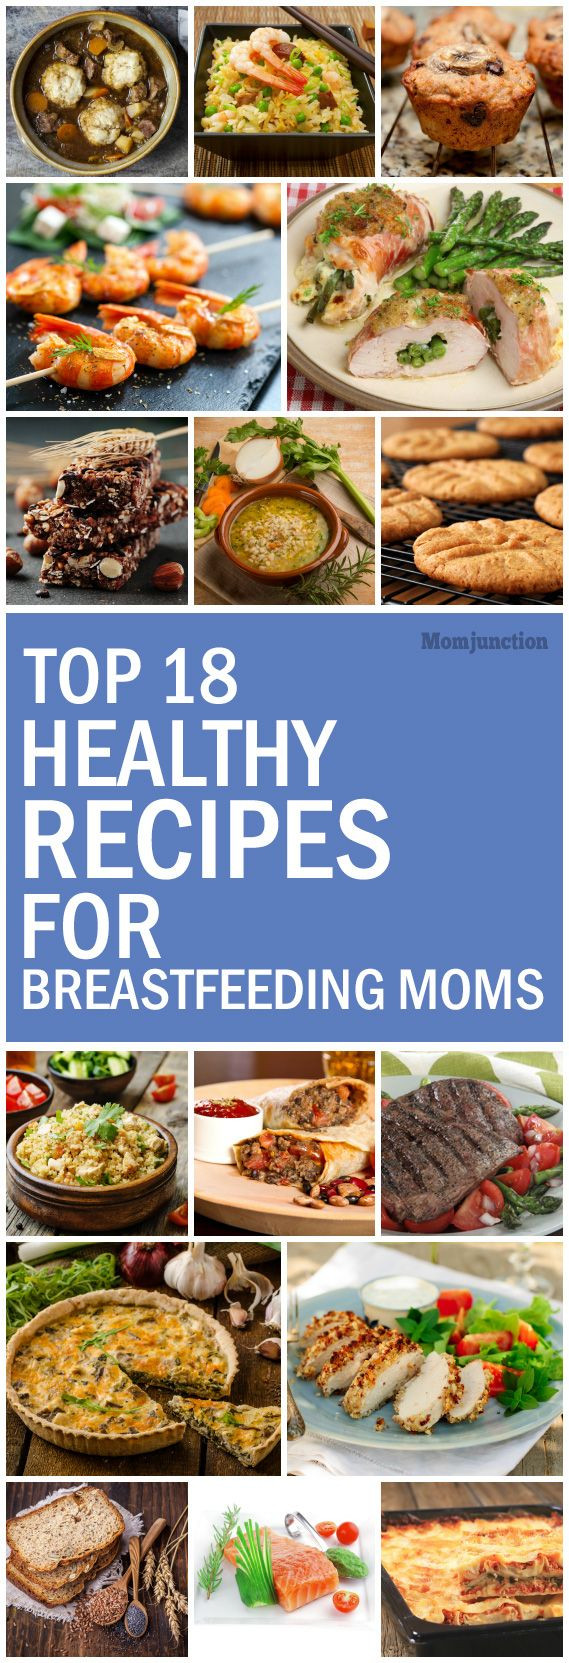 Healthy Snacks While Breastfeeding
 17 Best ideas about Breastfeeding Foods on Pinterest